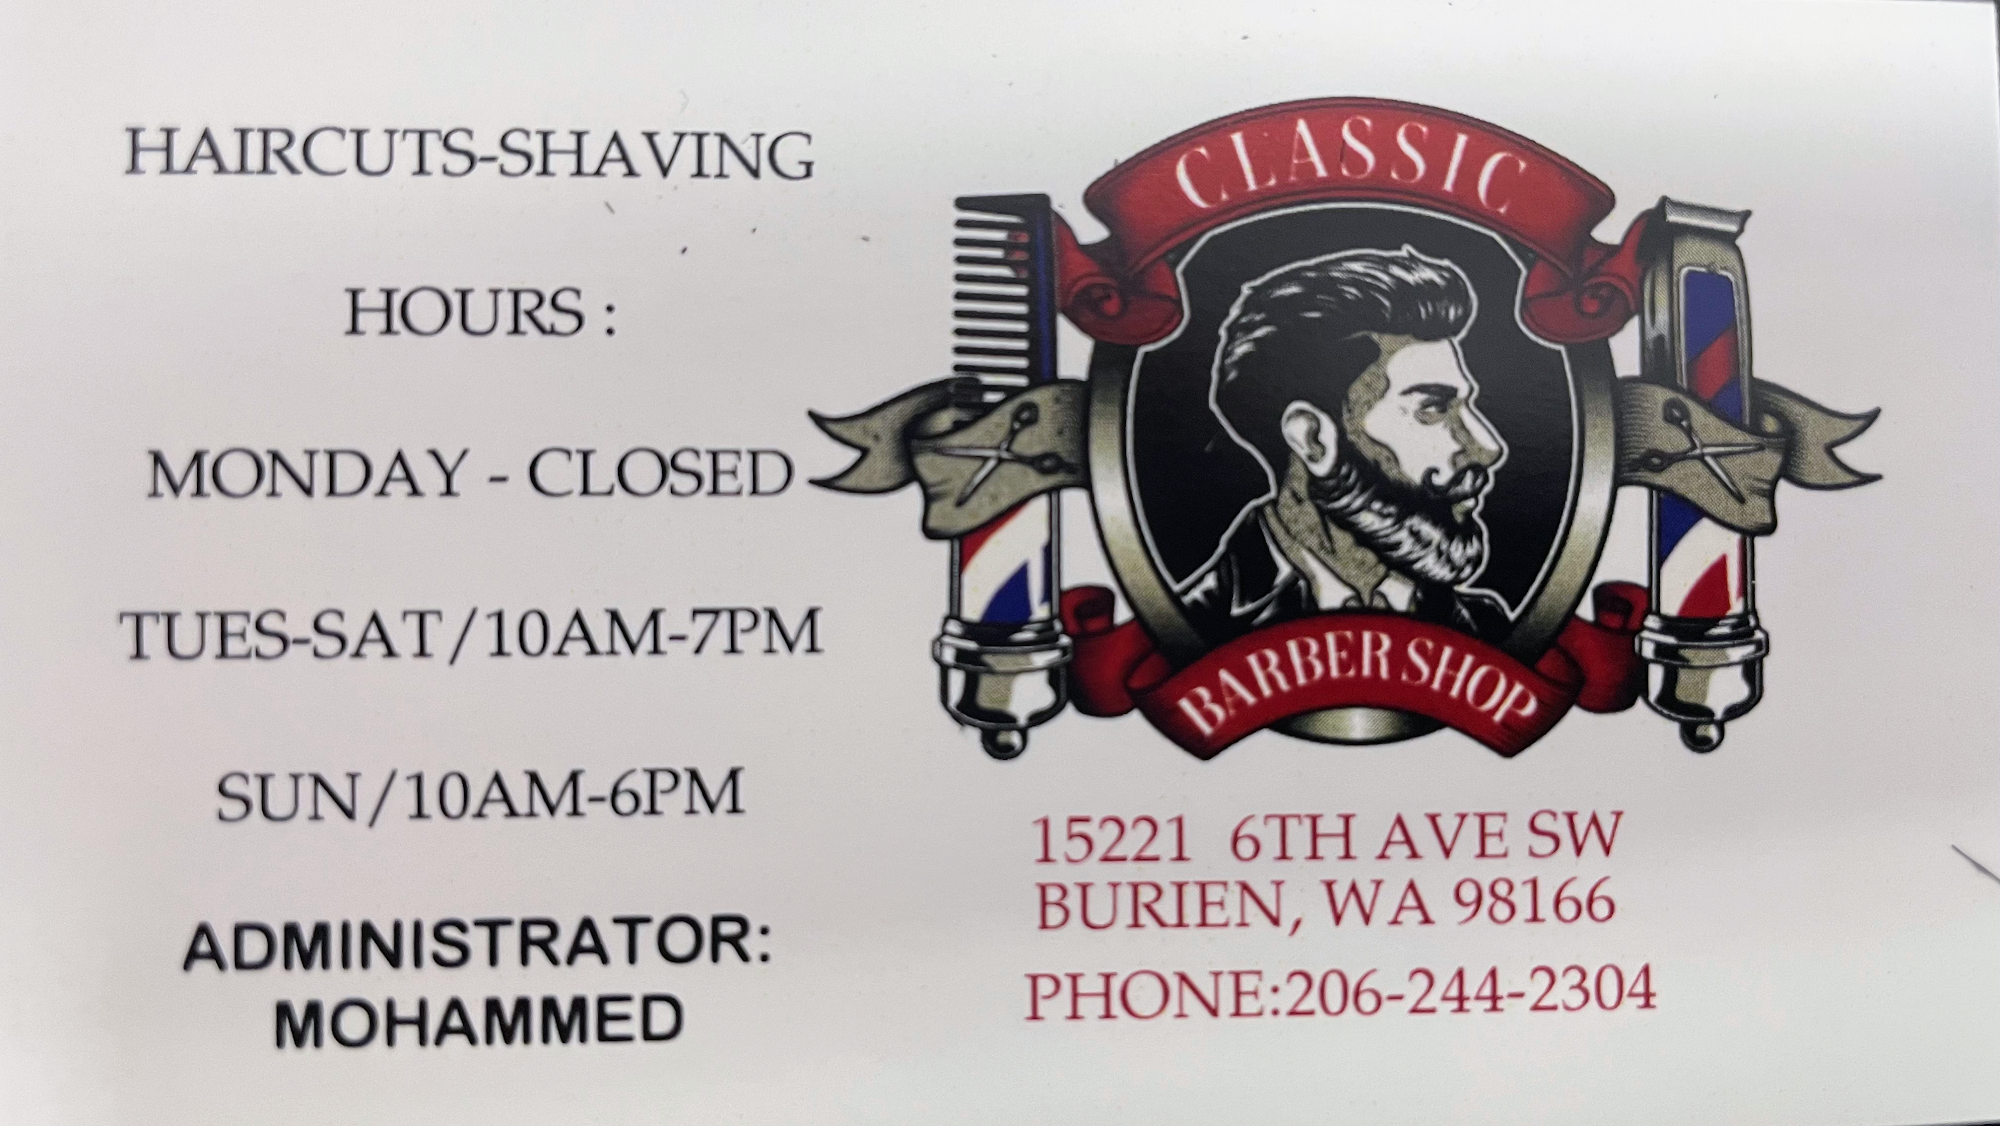 Classic Barber Shop 2nd